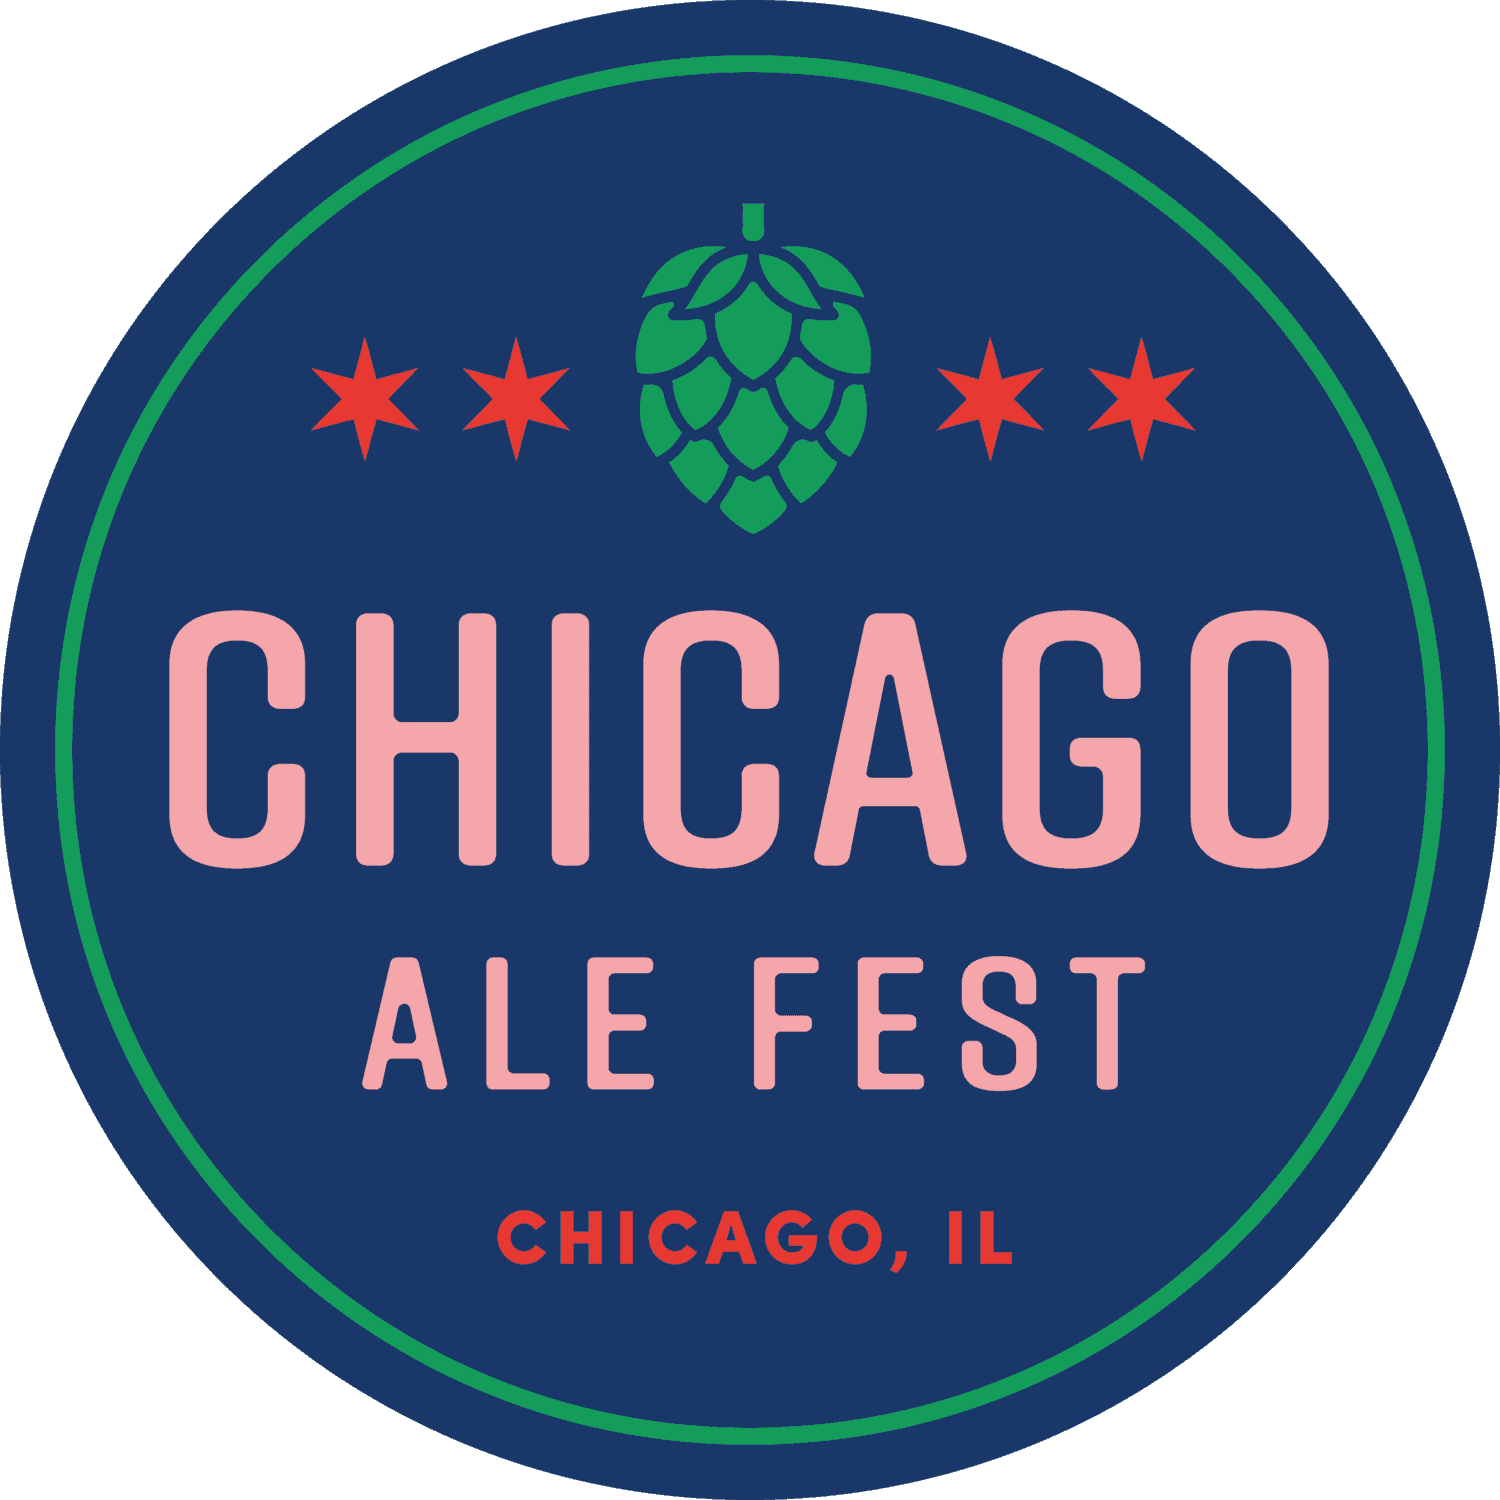 Chicago Ale Fest Logo.